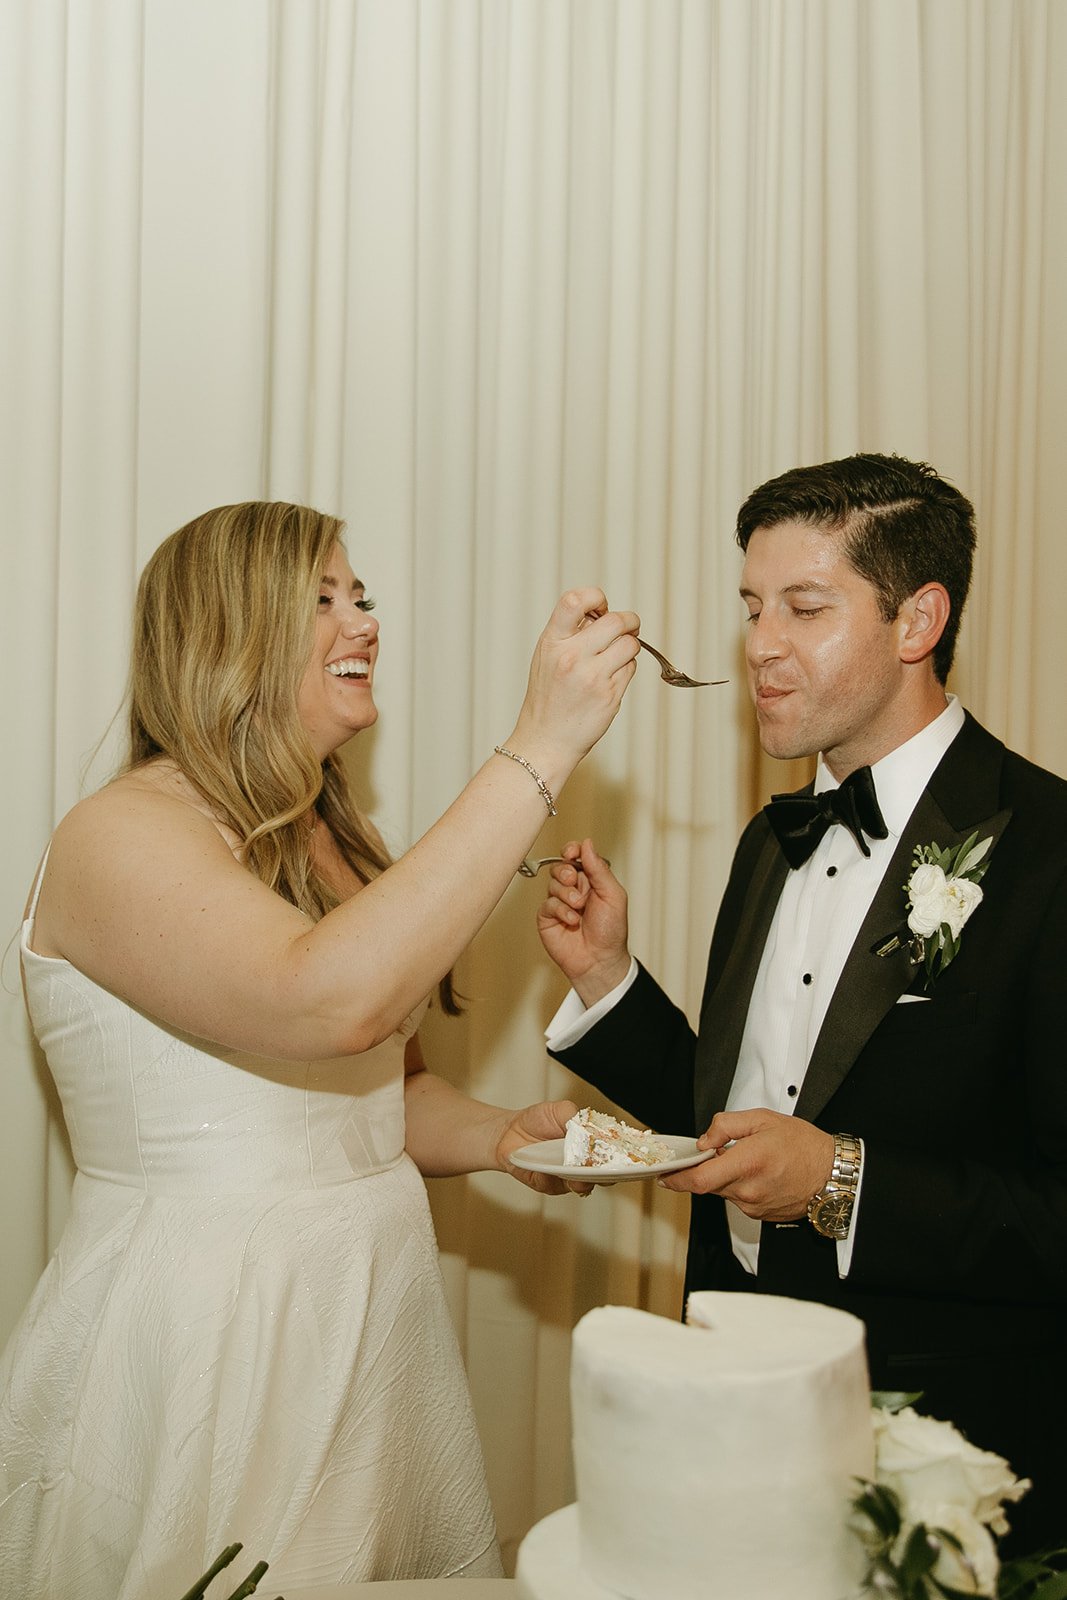 Bride and groom feeding eachother wedding cake